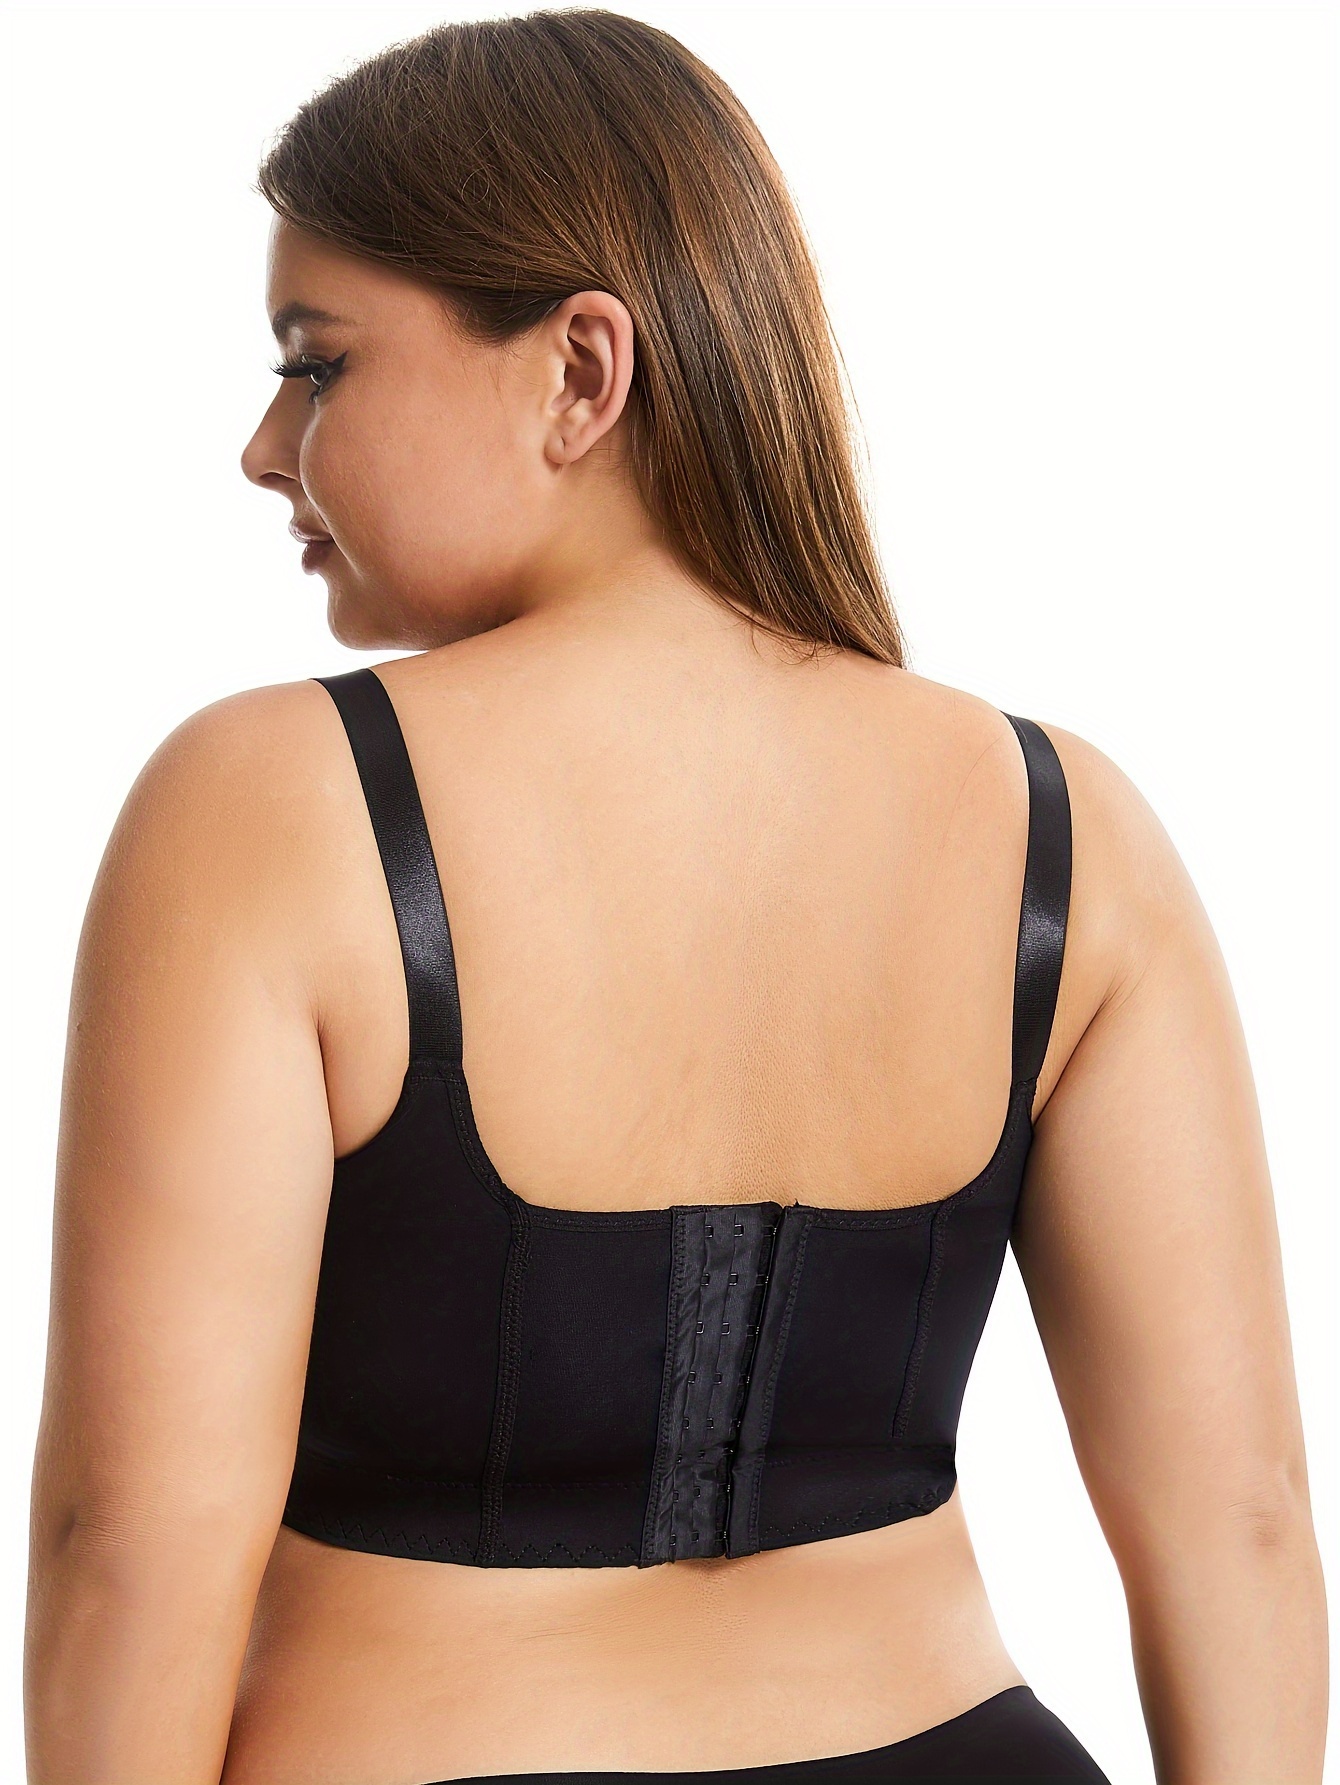  Push Up Bra For Women Underwire Plus Size Adjustable Soft  Padding Everyday Bras Black 40C